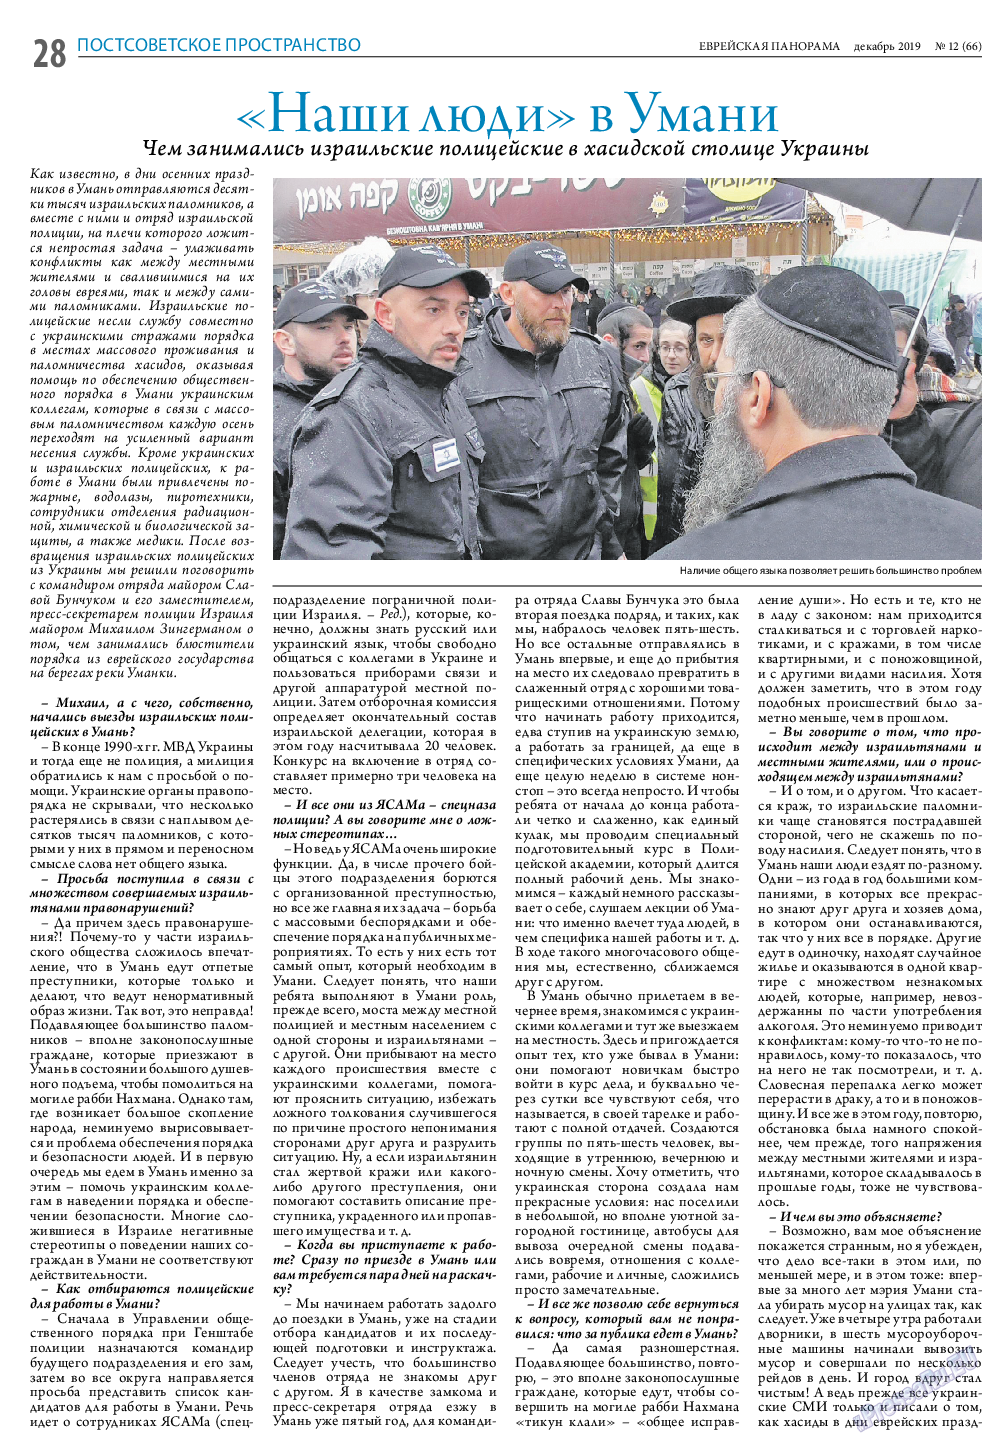 Еврейская панорама, газета. 2019 №12 стр.28